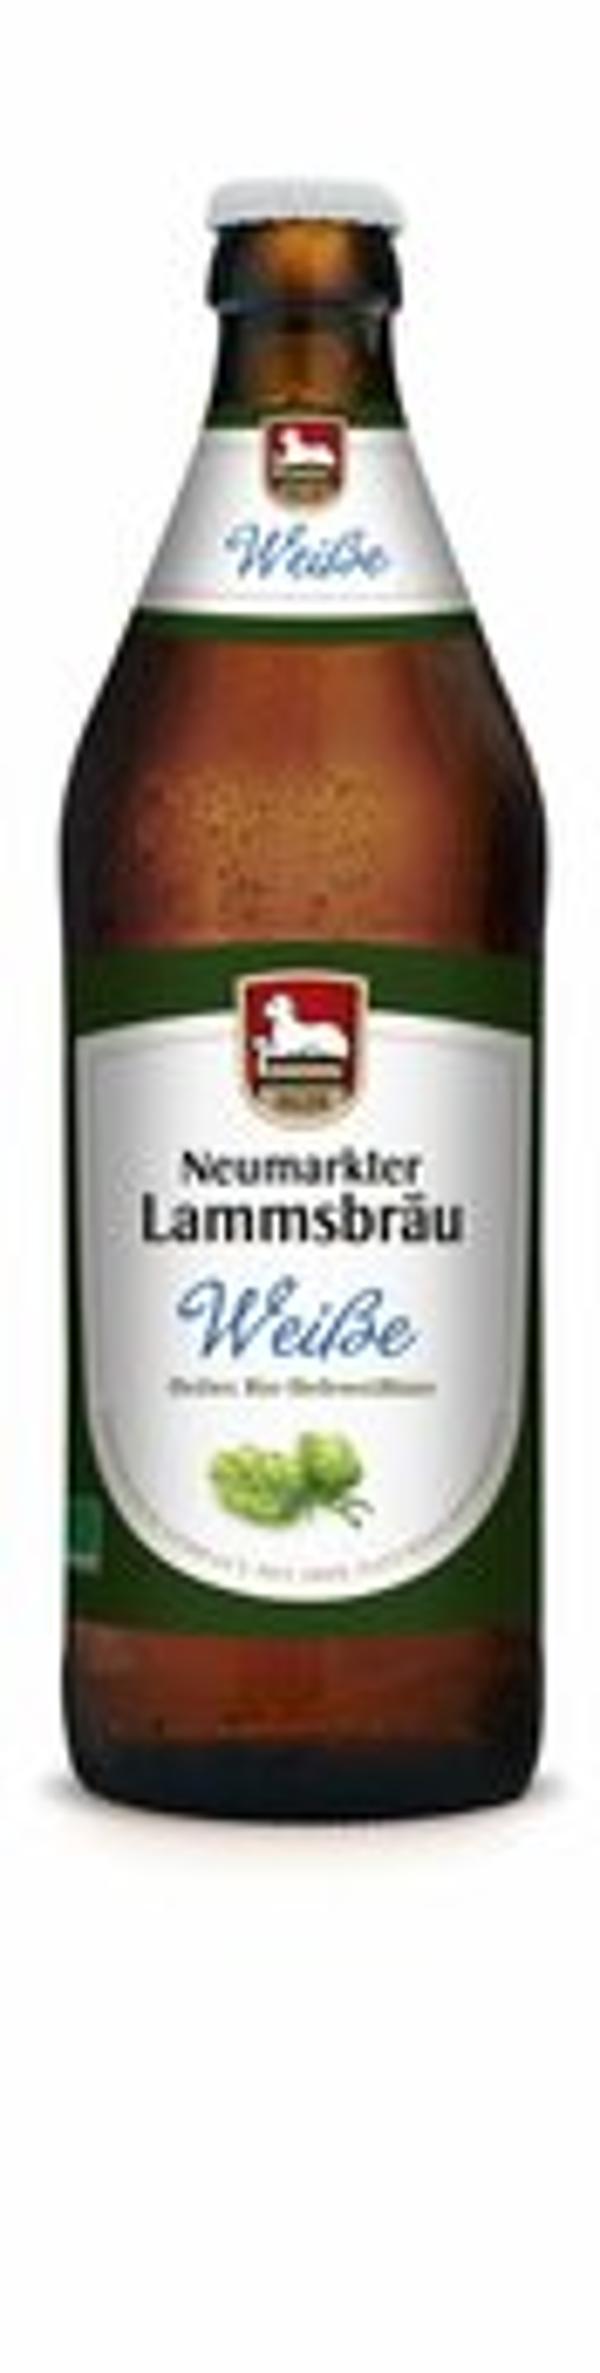 Produktfoto zu Kiste Lammsbräu Weisse (10 x 0,5L)